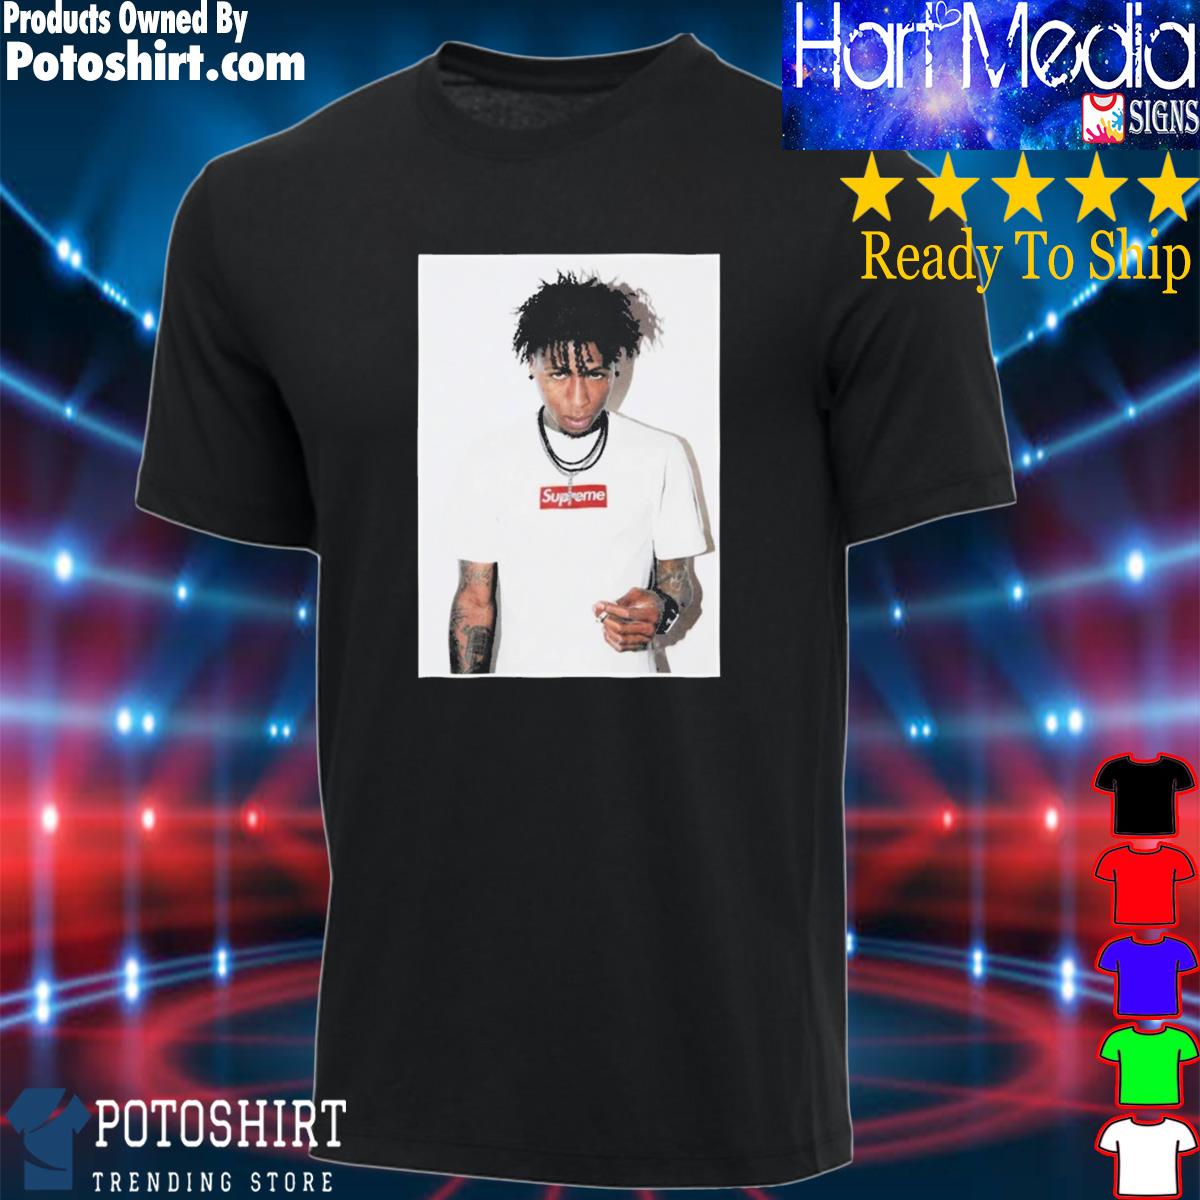 Product nBA Youngboy Supreme Shirt NBA Youngboy Supreme T Shirt